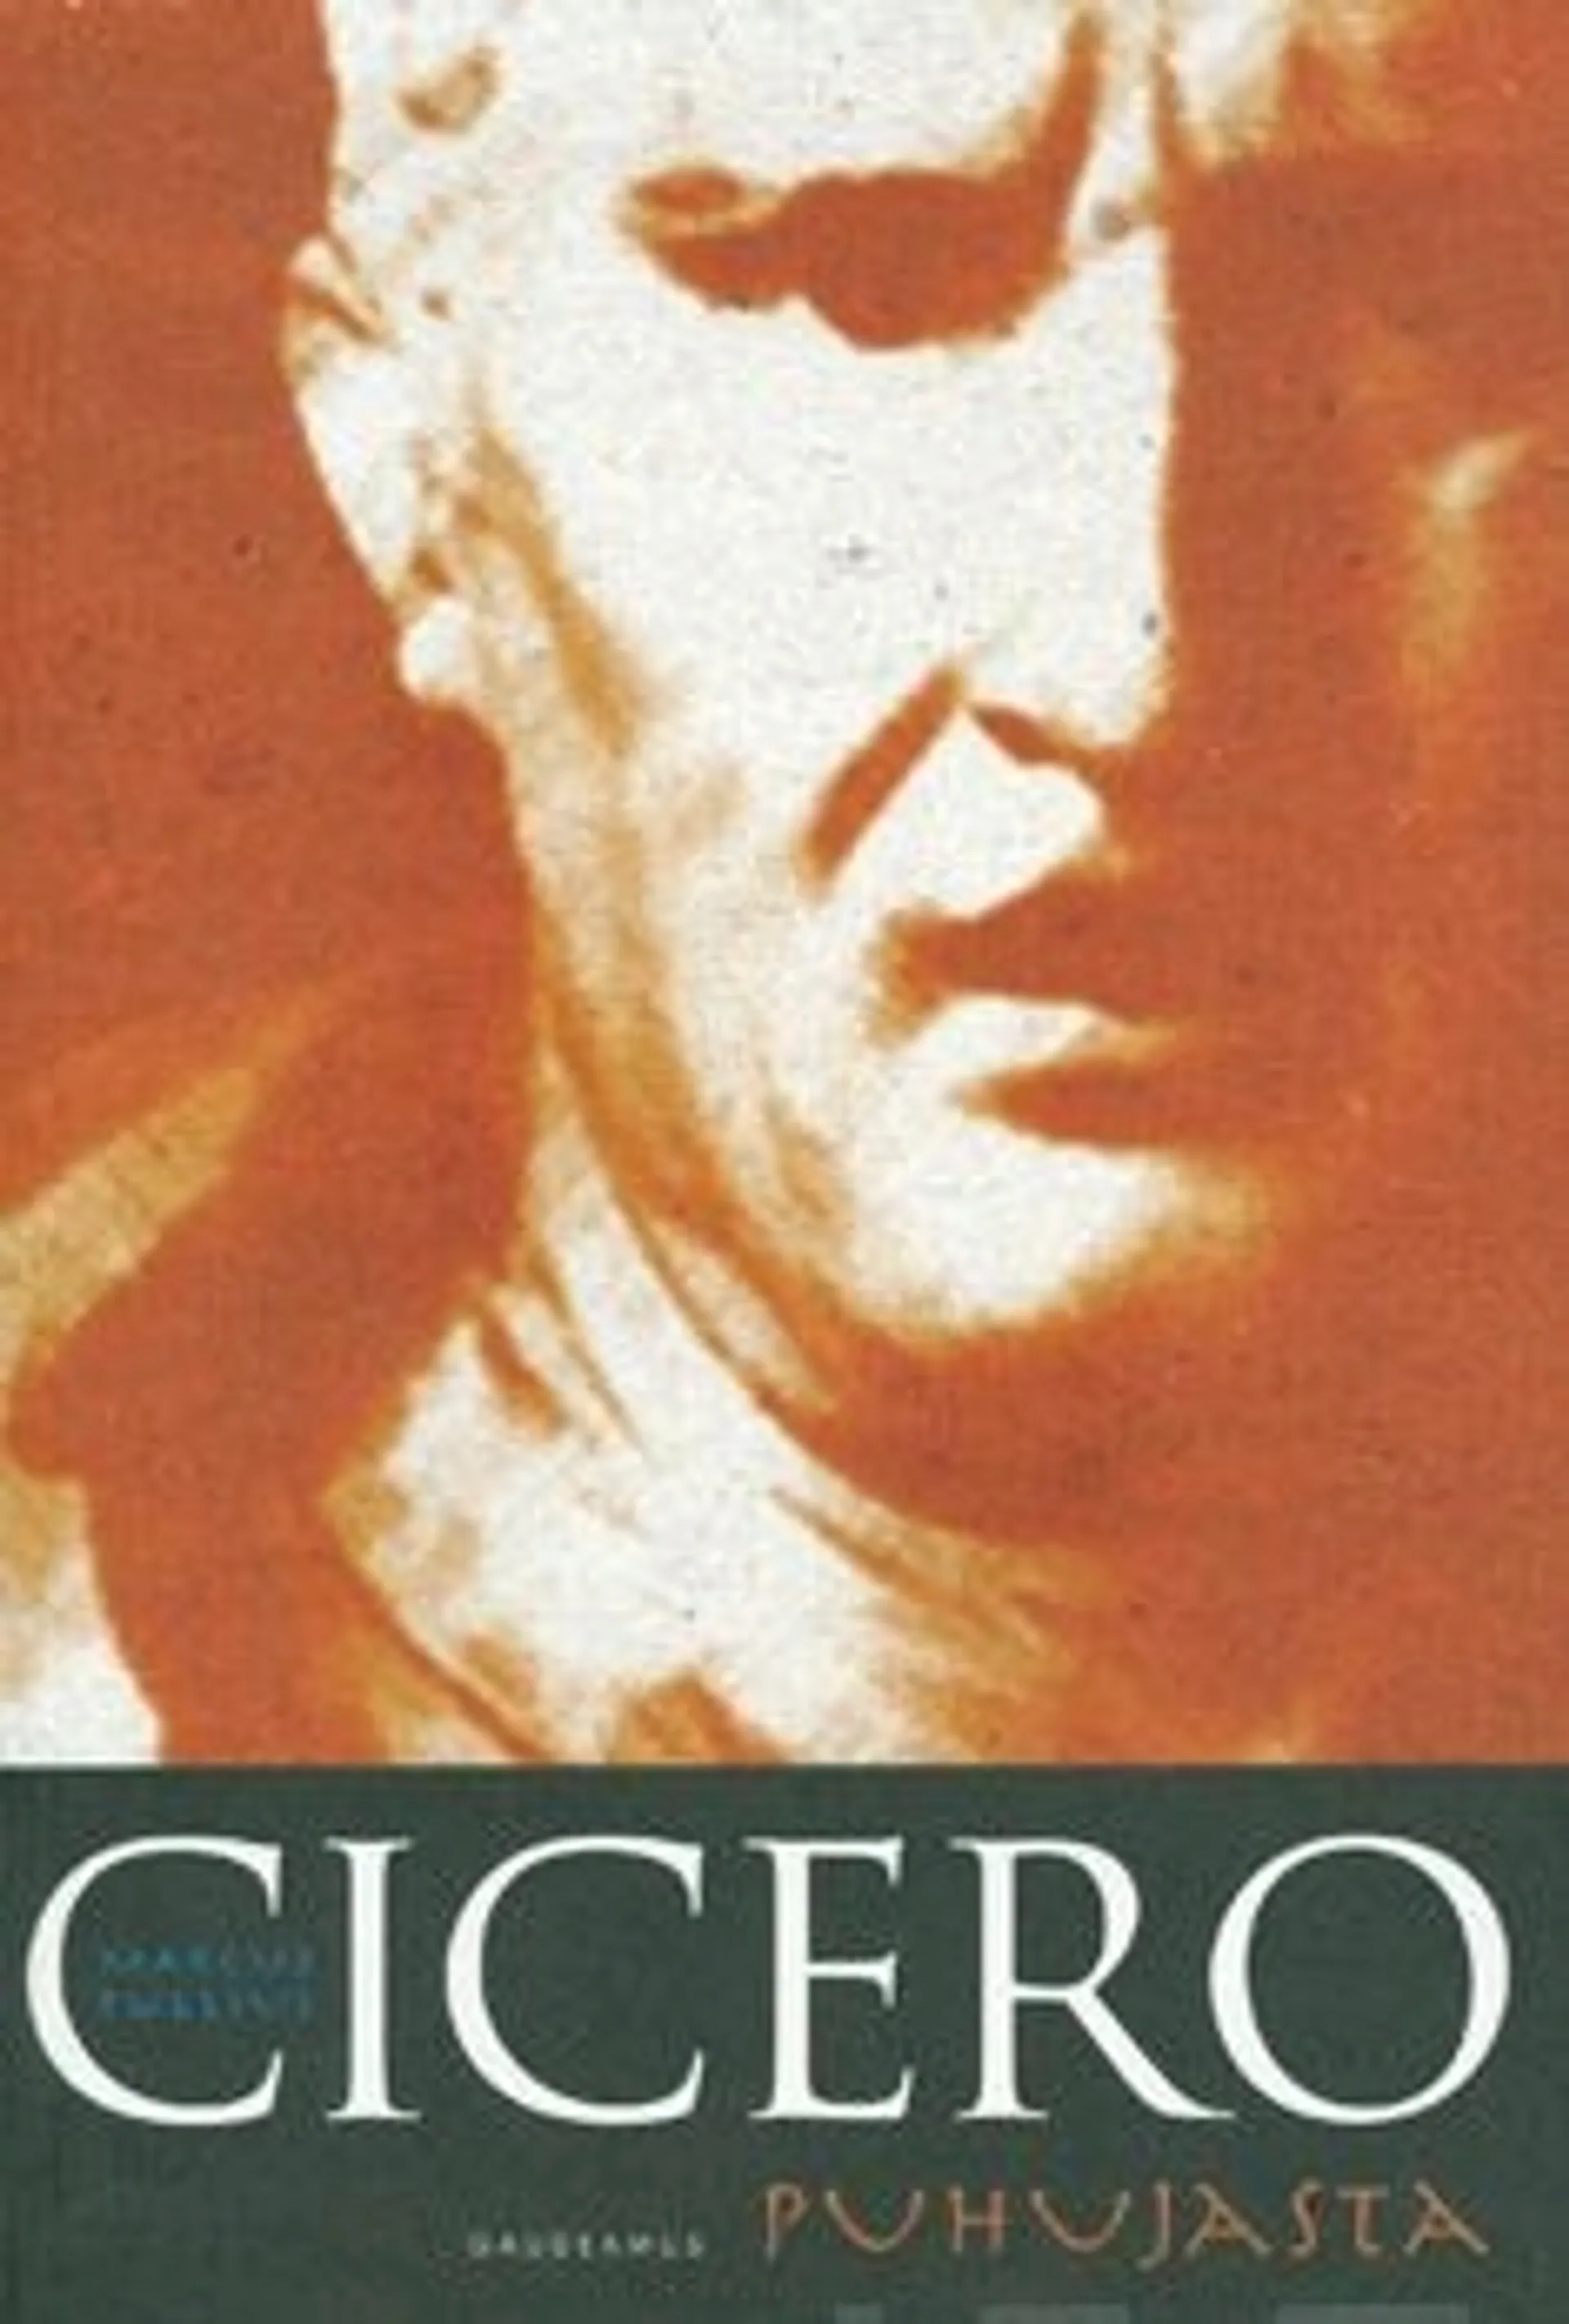 Cicero, Puhujasta